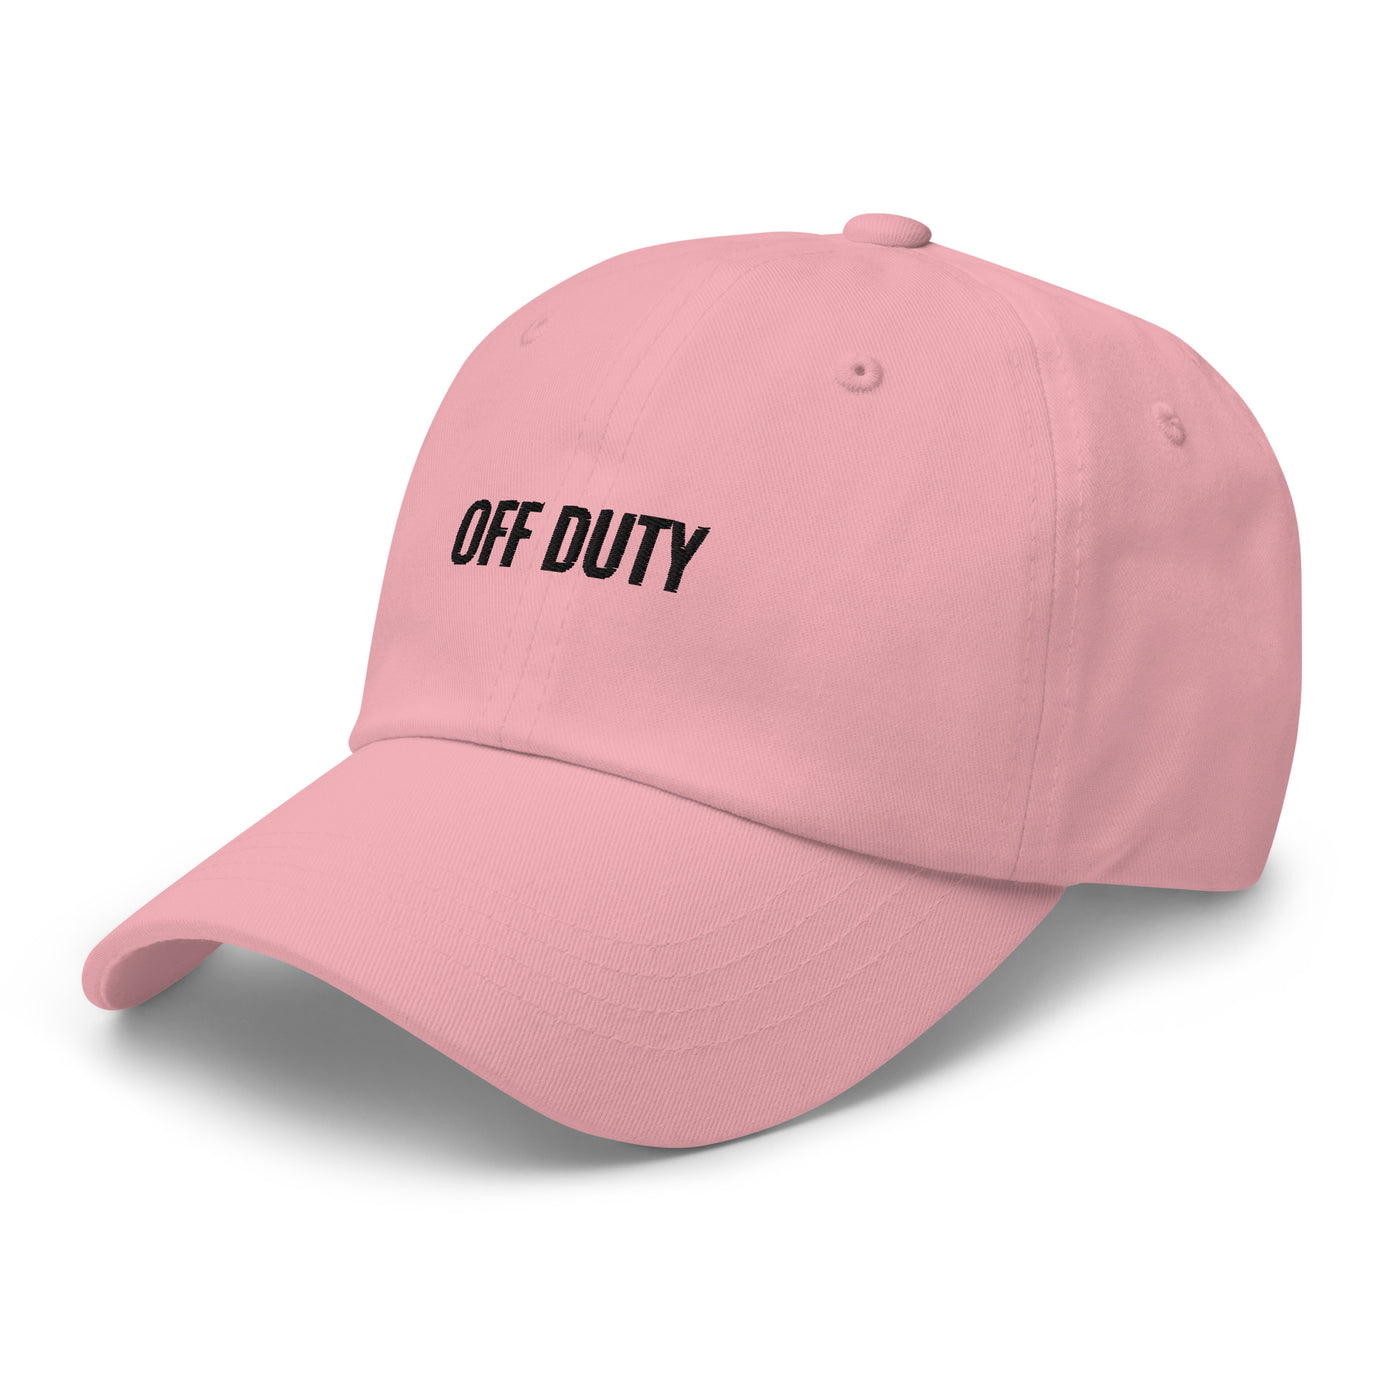 Off Duty Unisex Hat